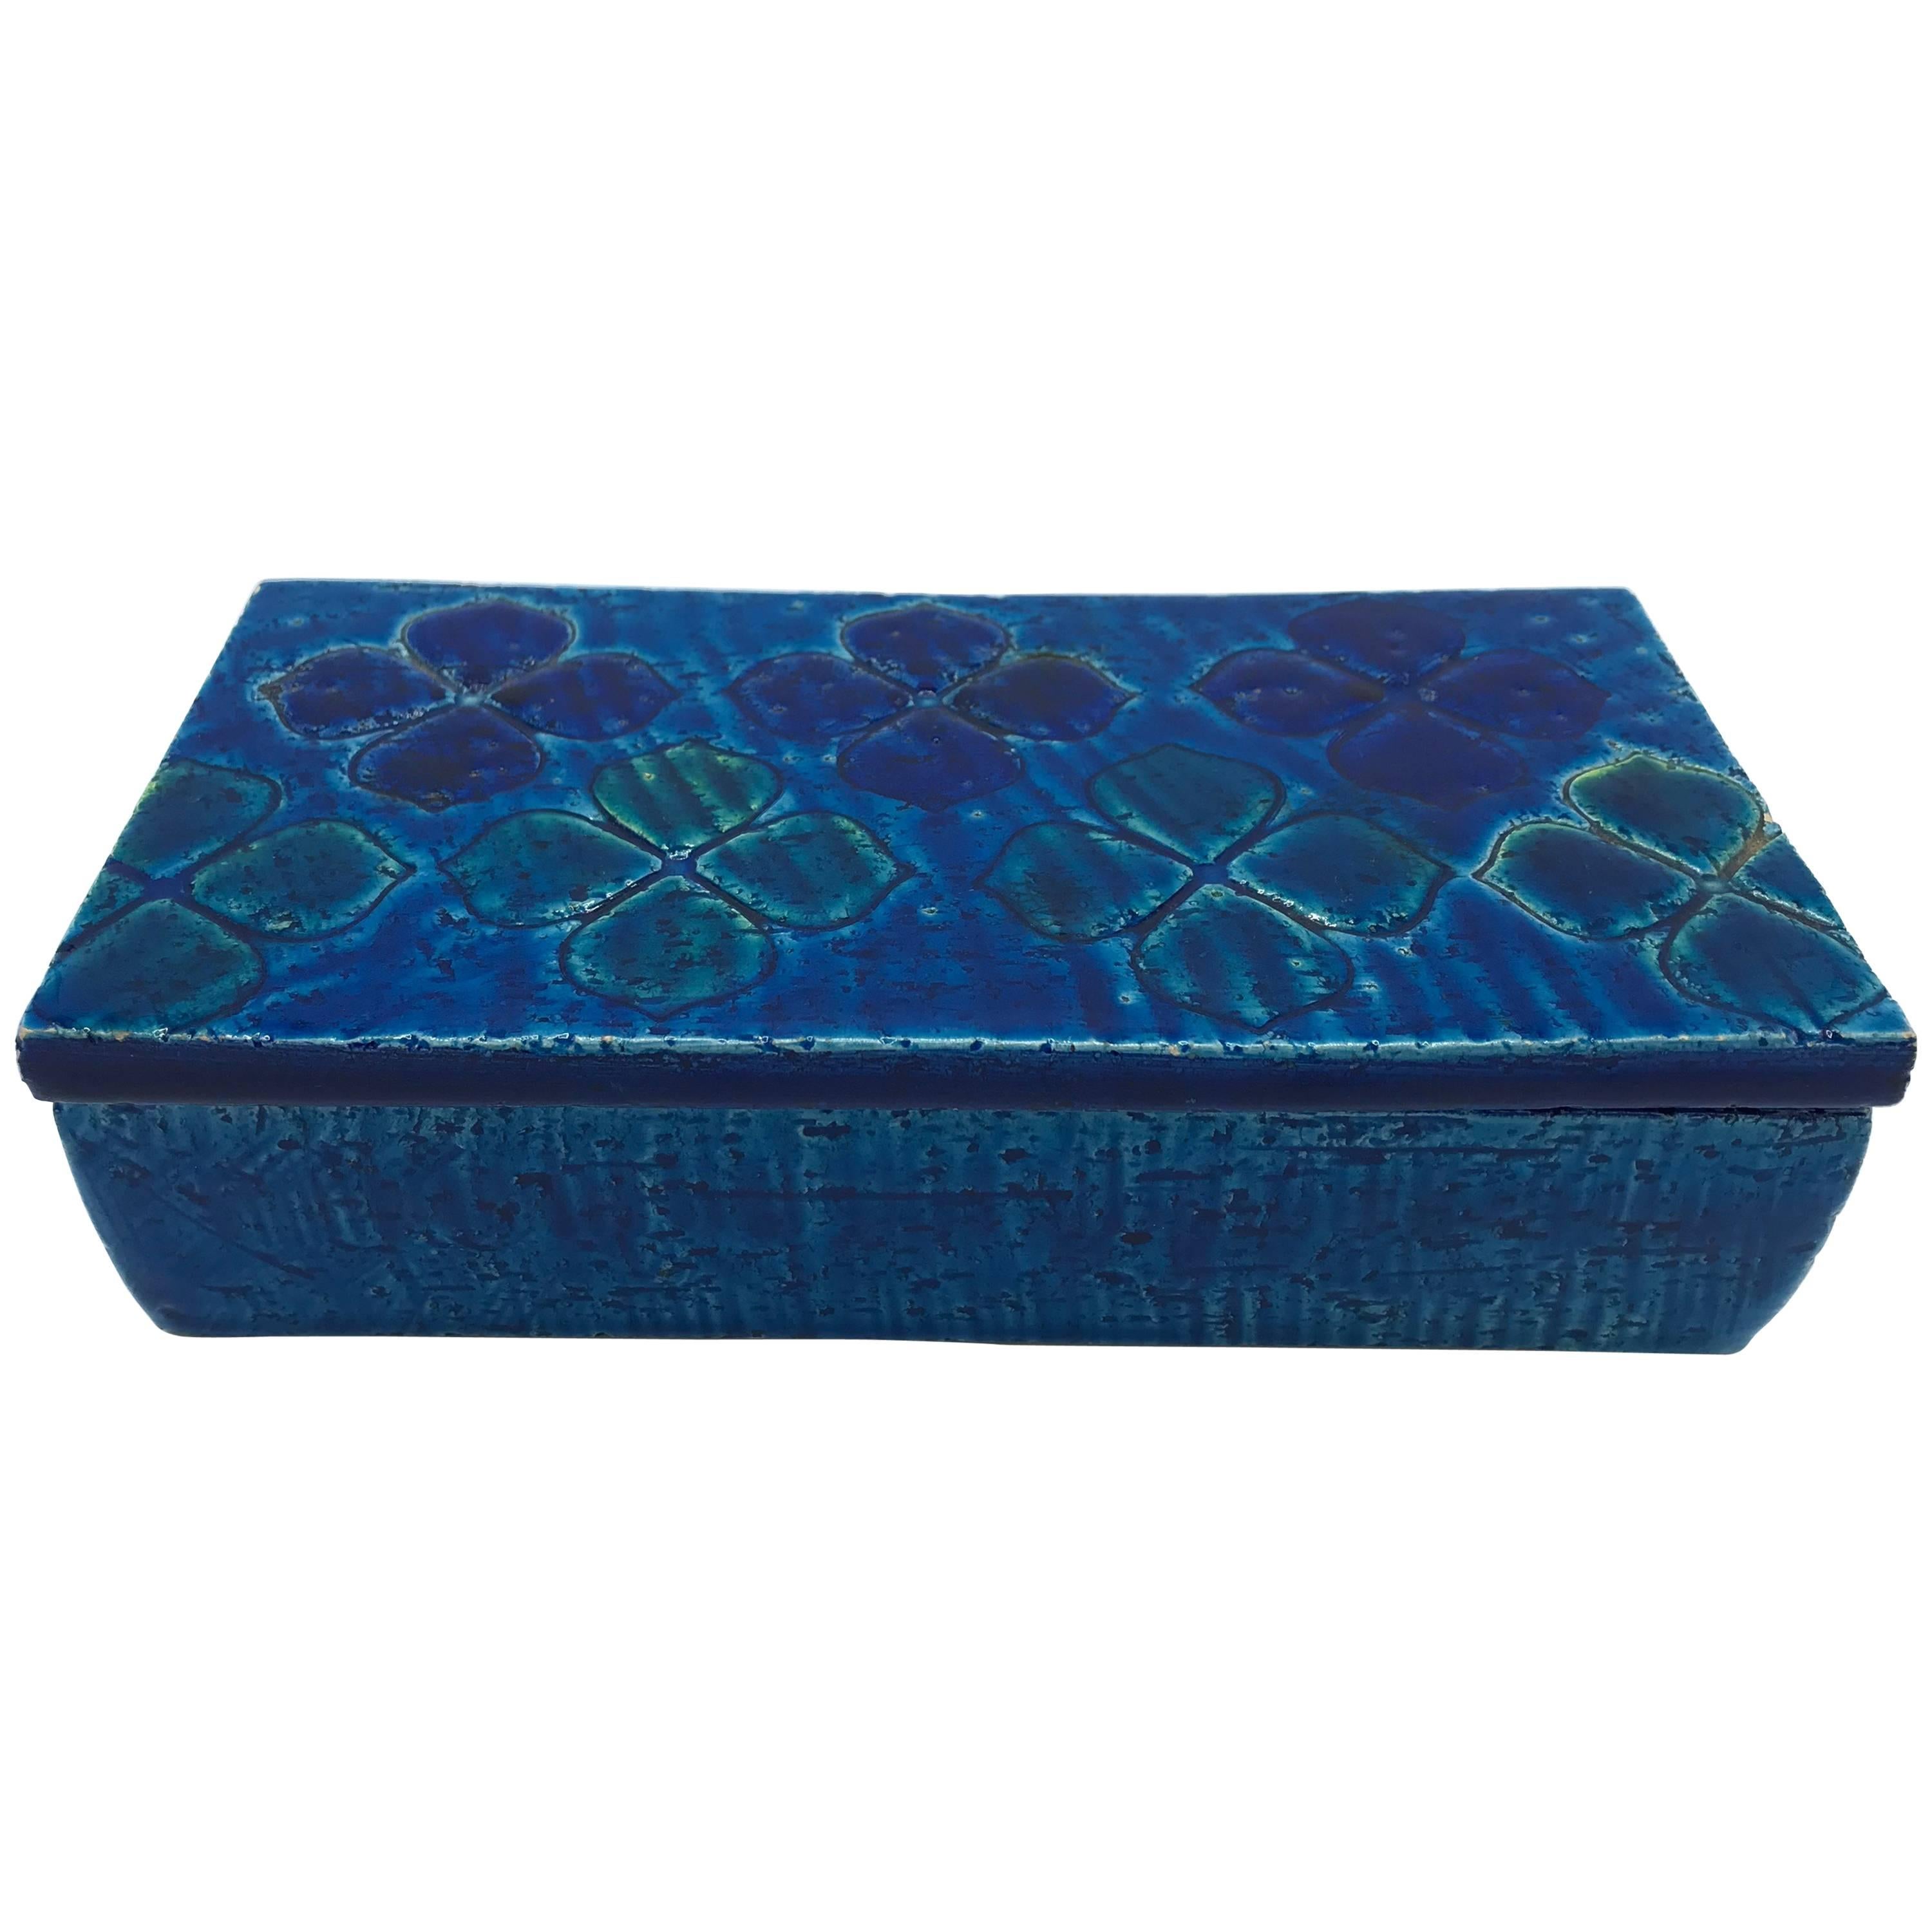 Aldo Londi Bitossi Blue Clover Motif Box, Sample #10/20